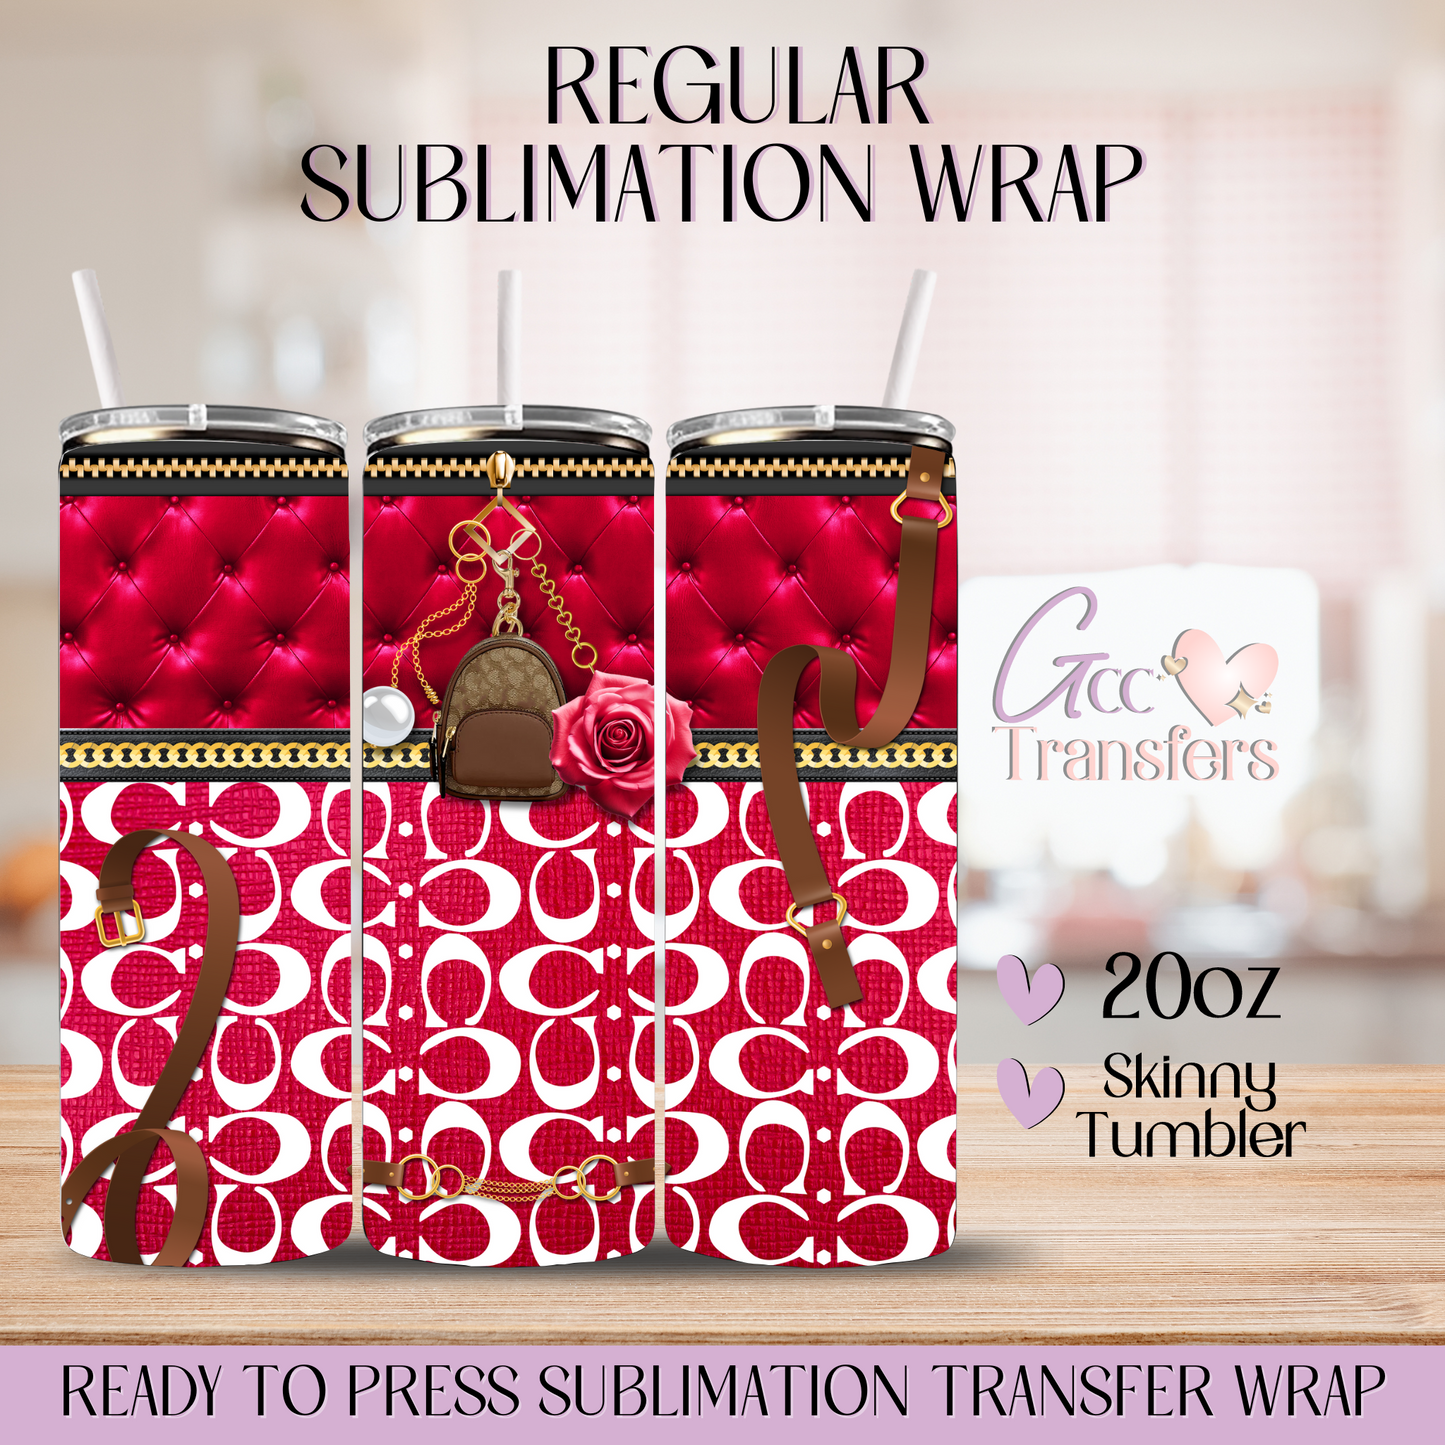 Fashion Purse Red Rose - 20oz Regular Sublimation Wrap